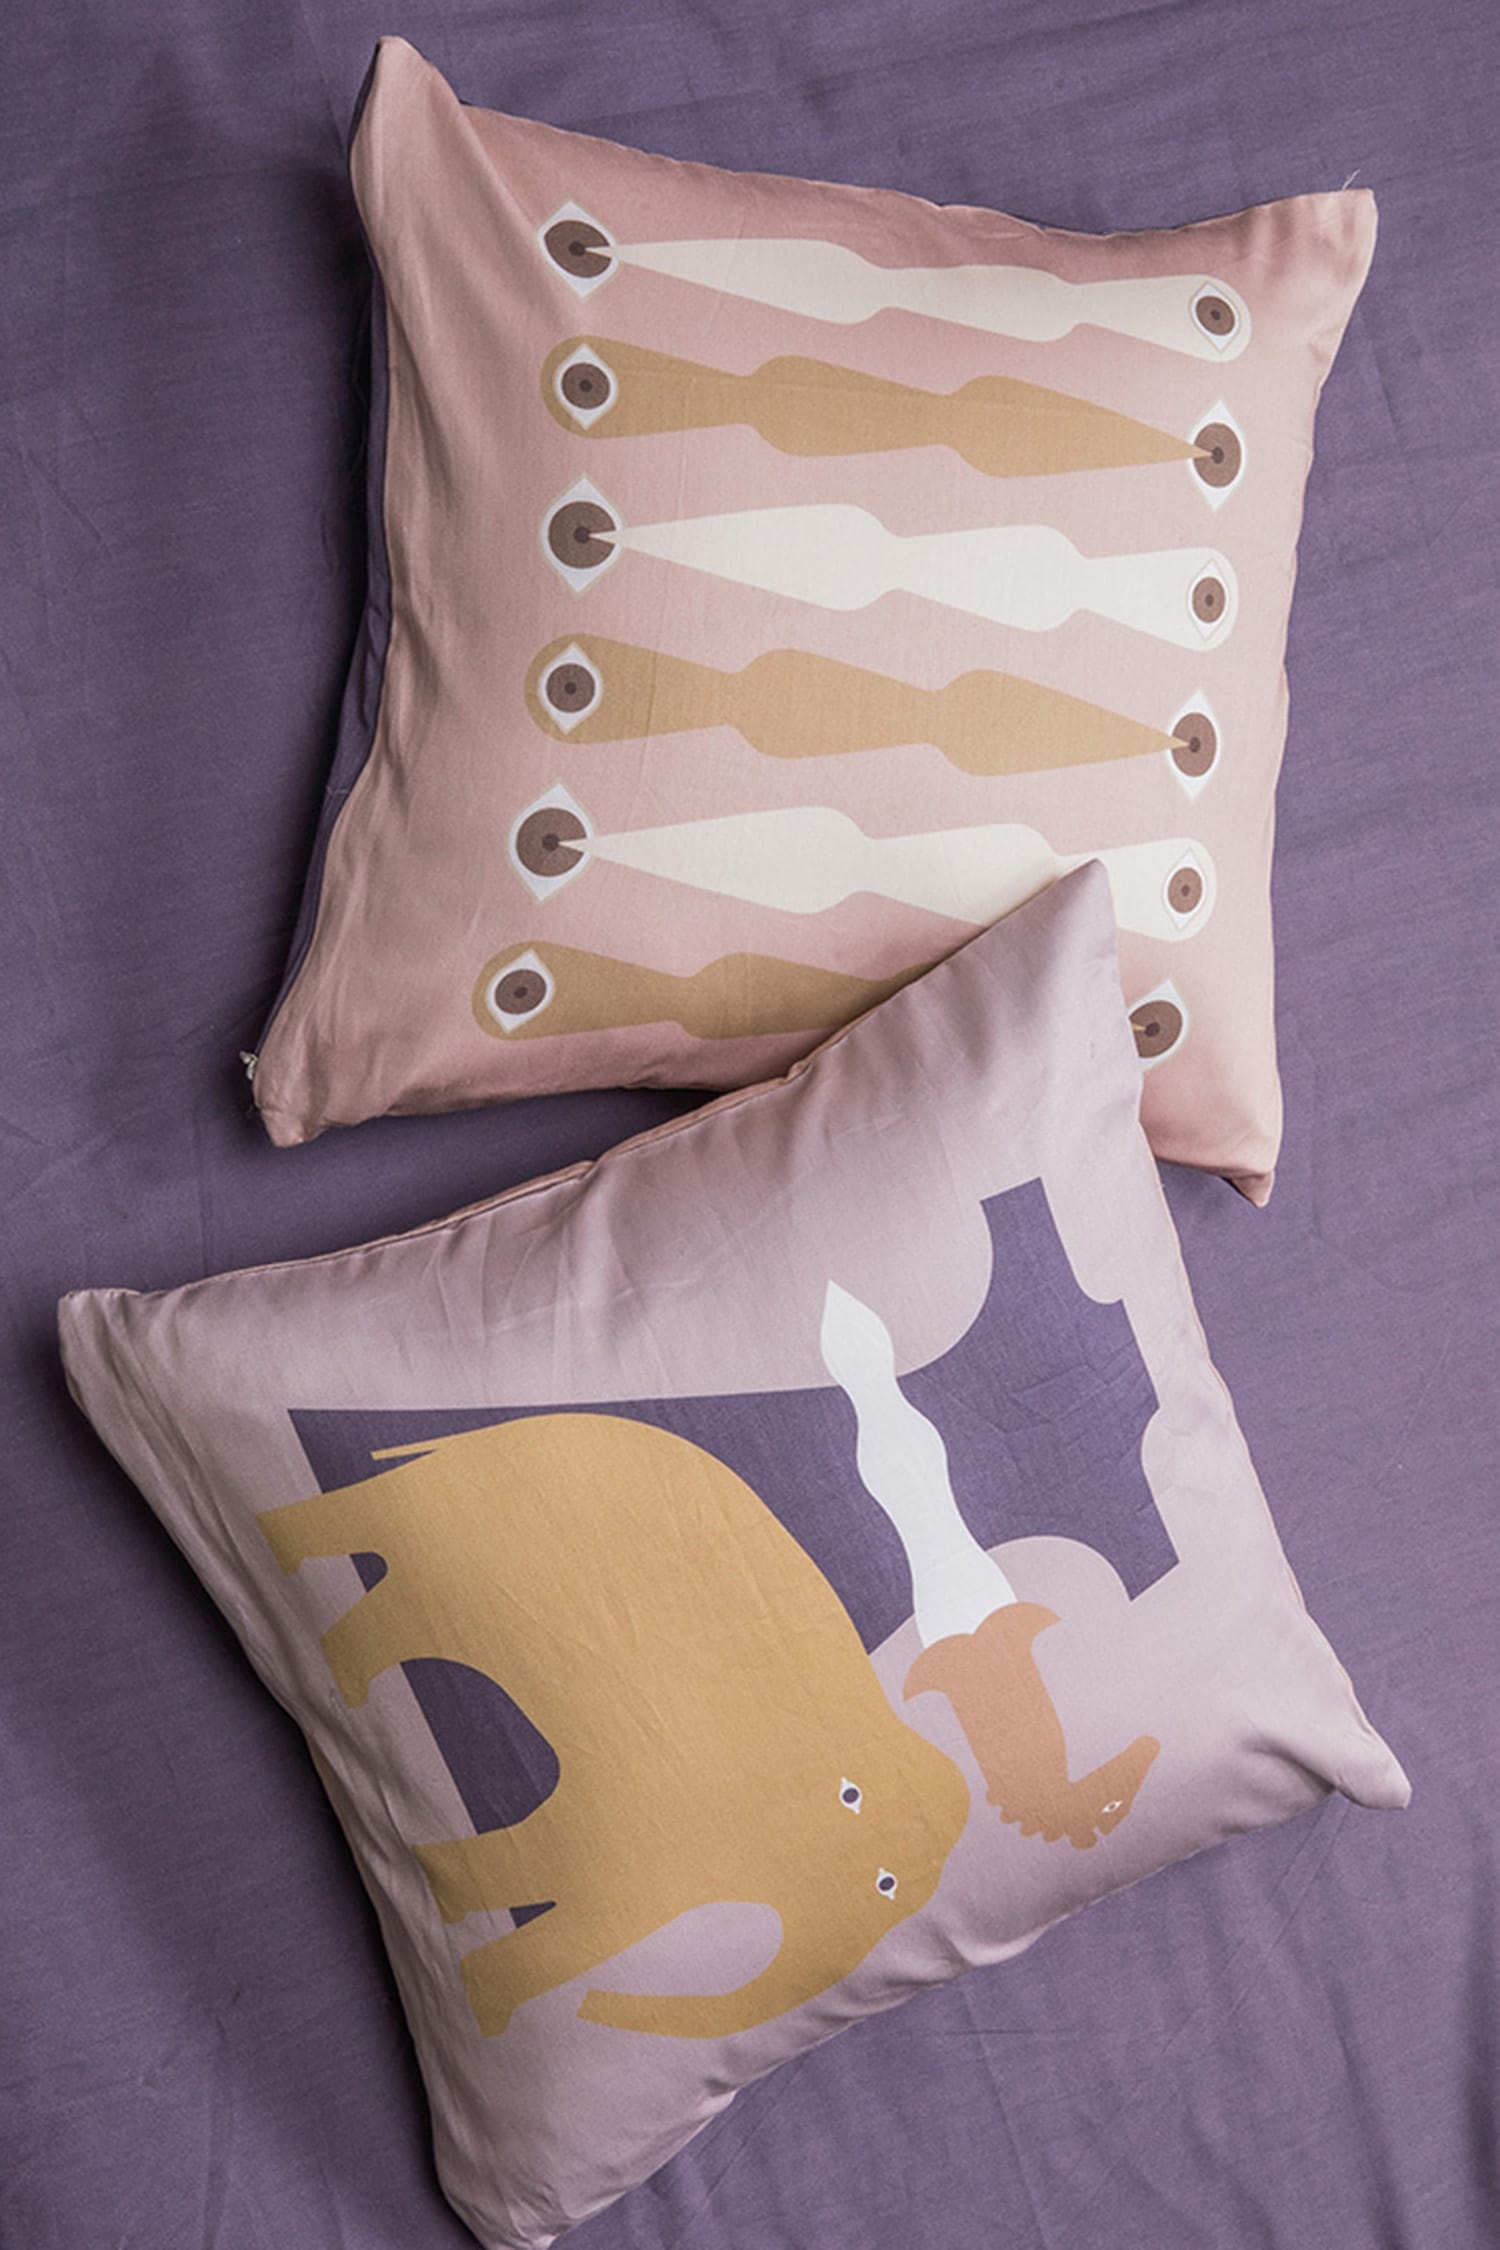 Kyoona The Basharat Animal And Eye Print Cushion Covers - Set Of 2